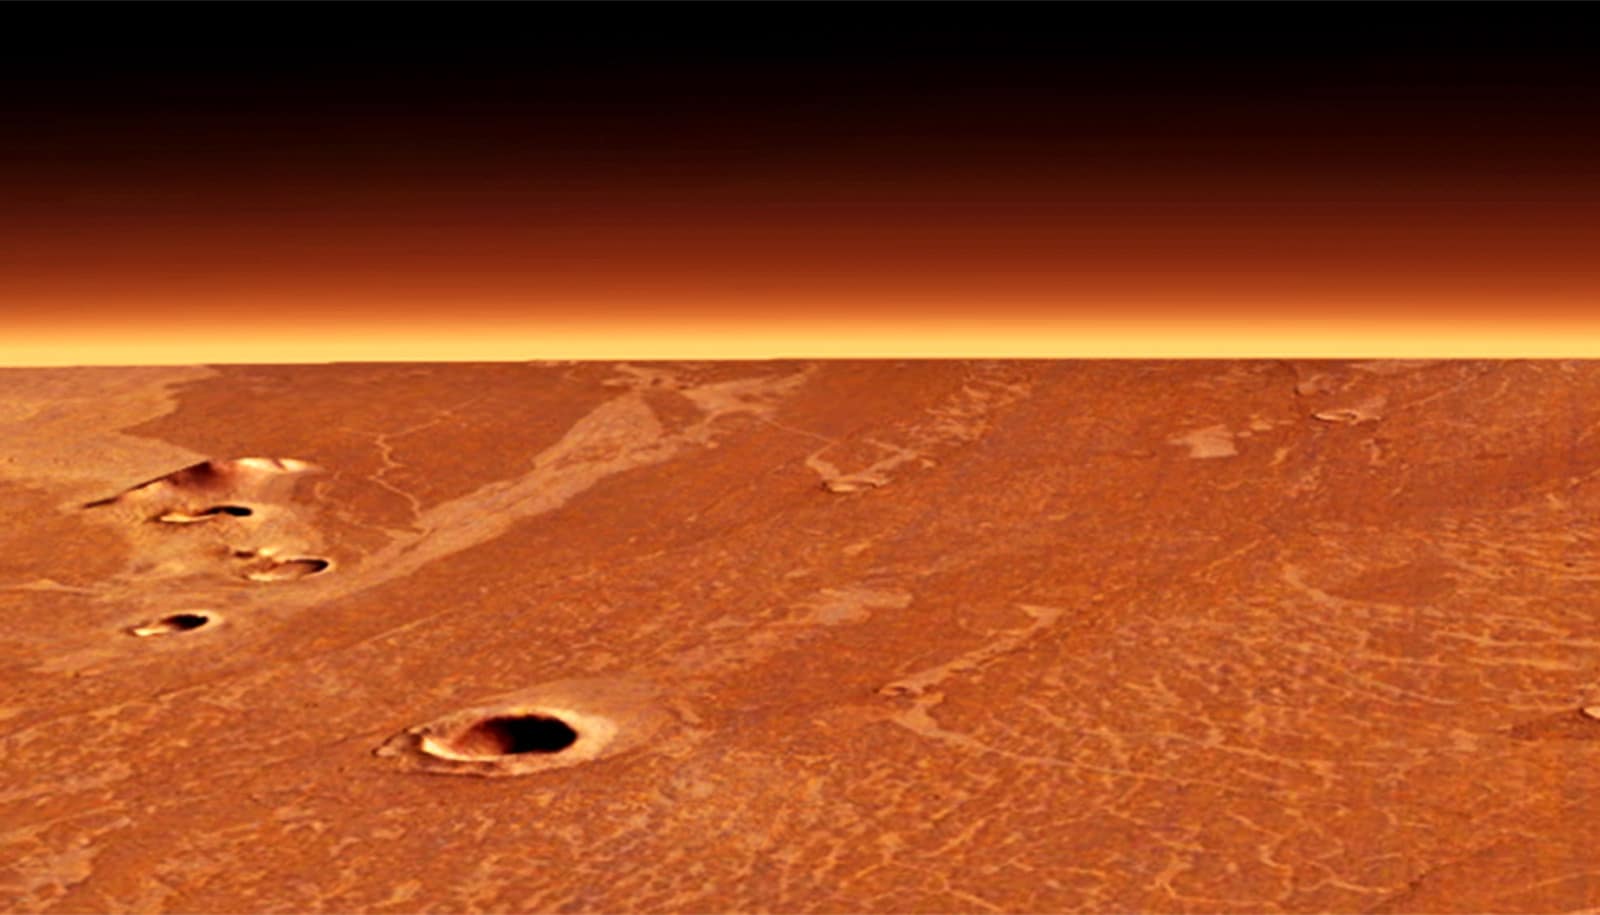 Lava flows on Mars reveal a turbulent history - Futurity